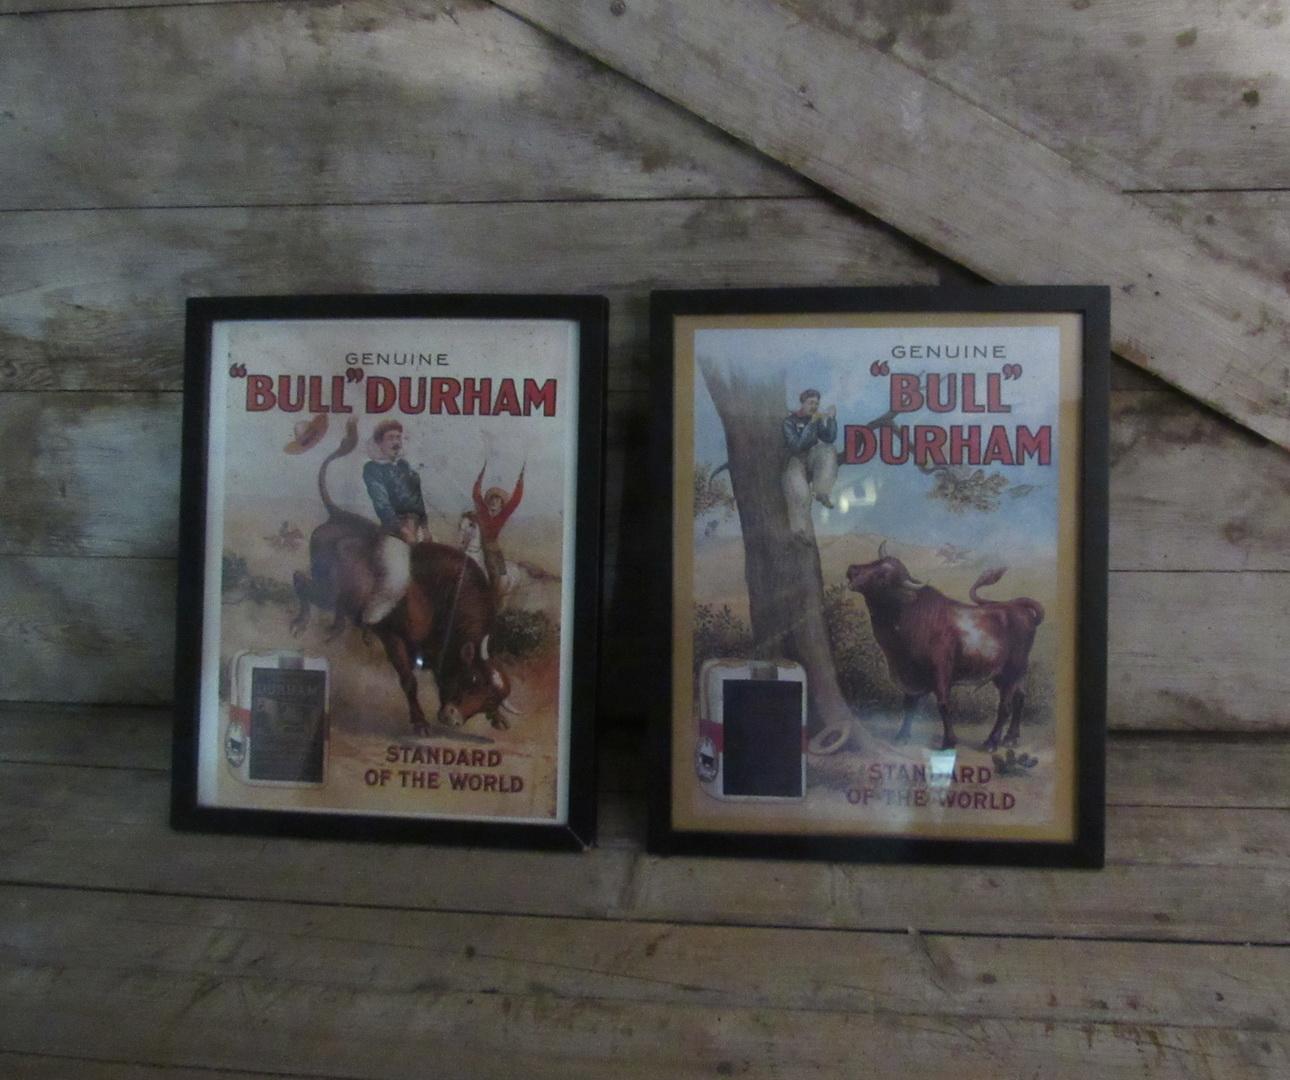 The Genuine "Bull" Durham Framed Replica Tobacco Prints